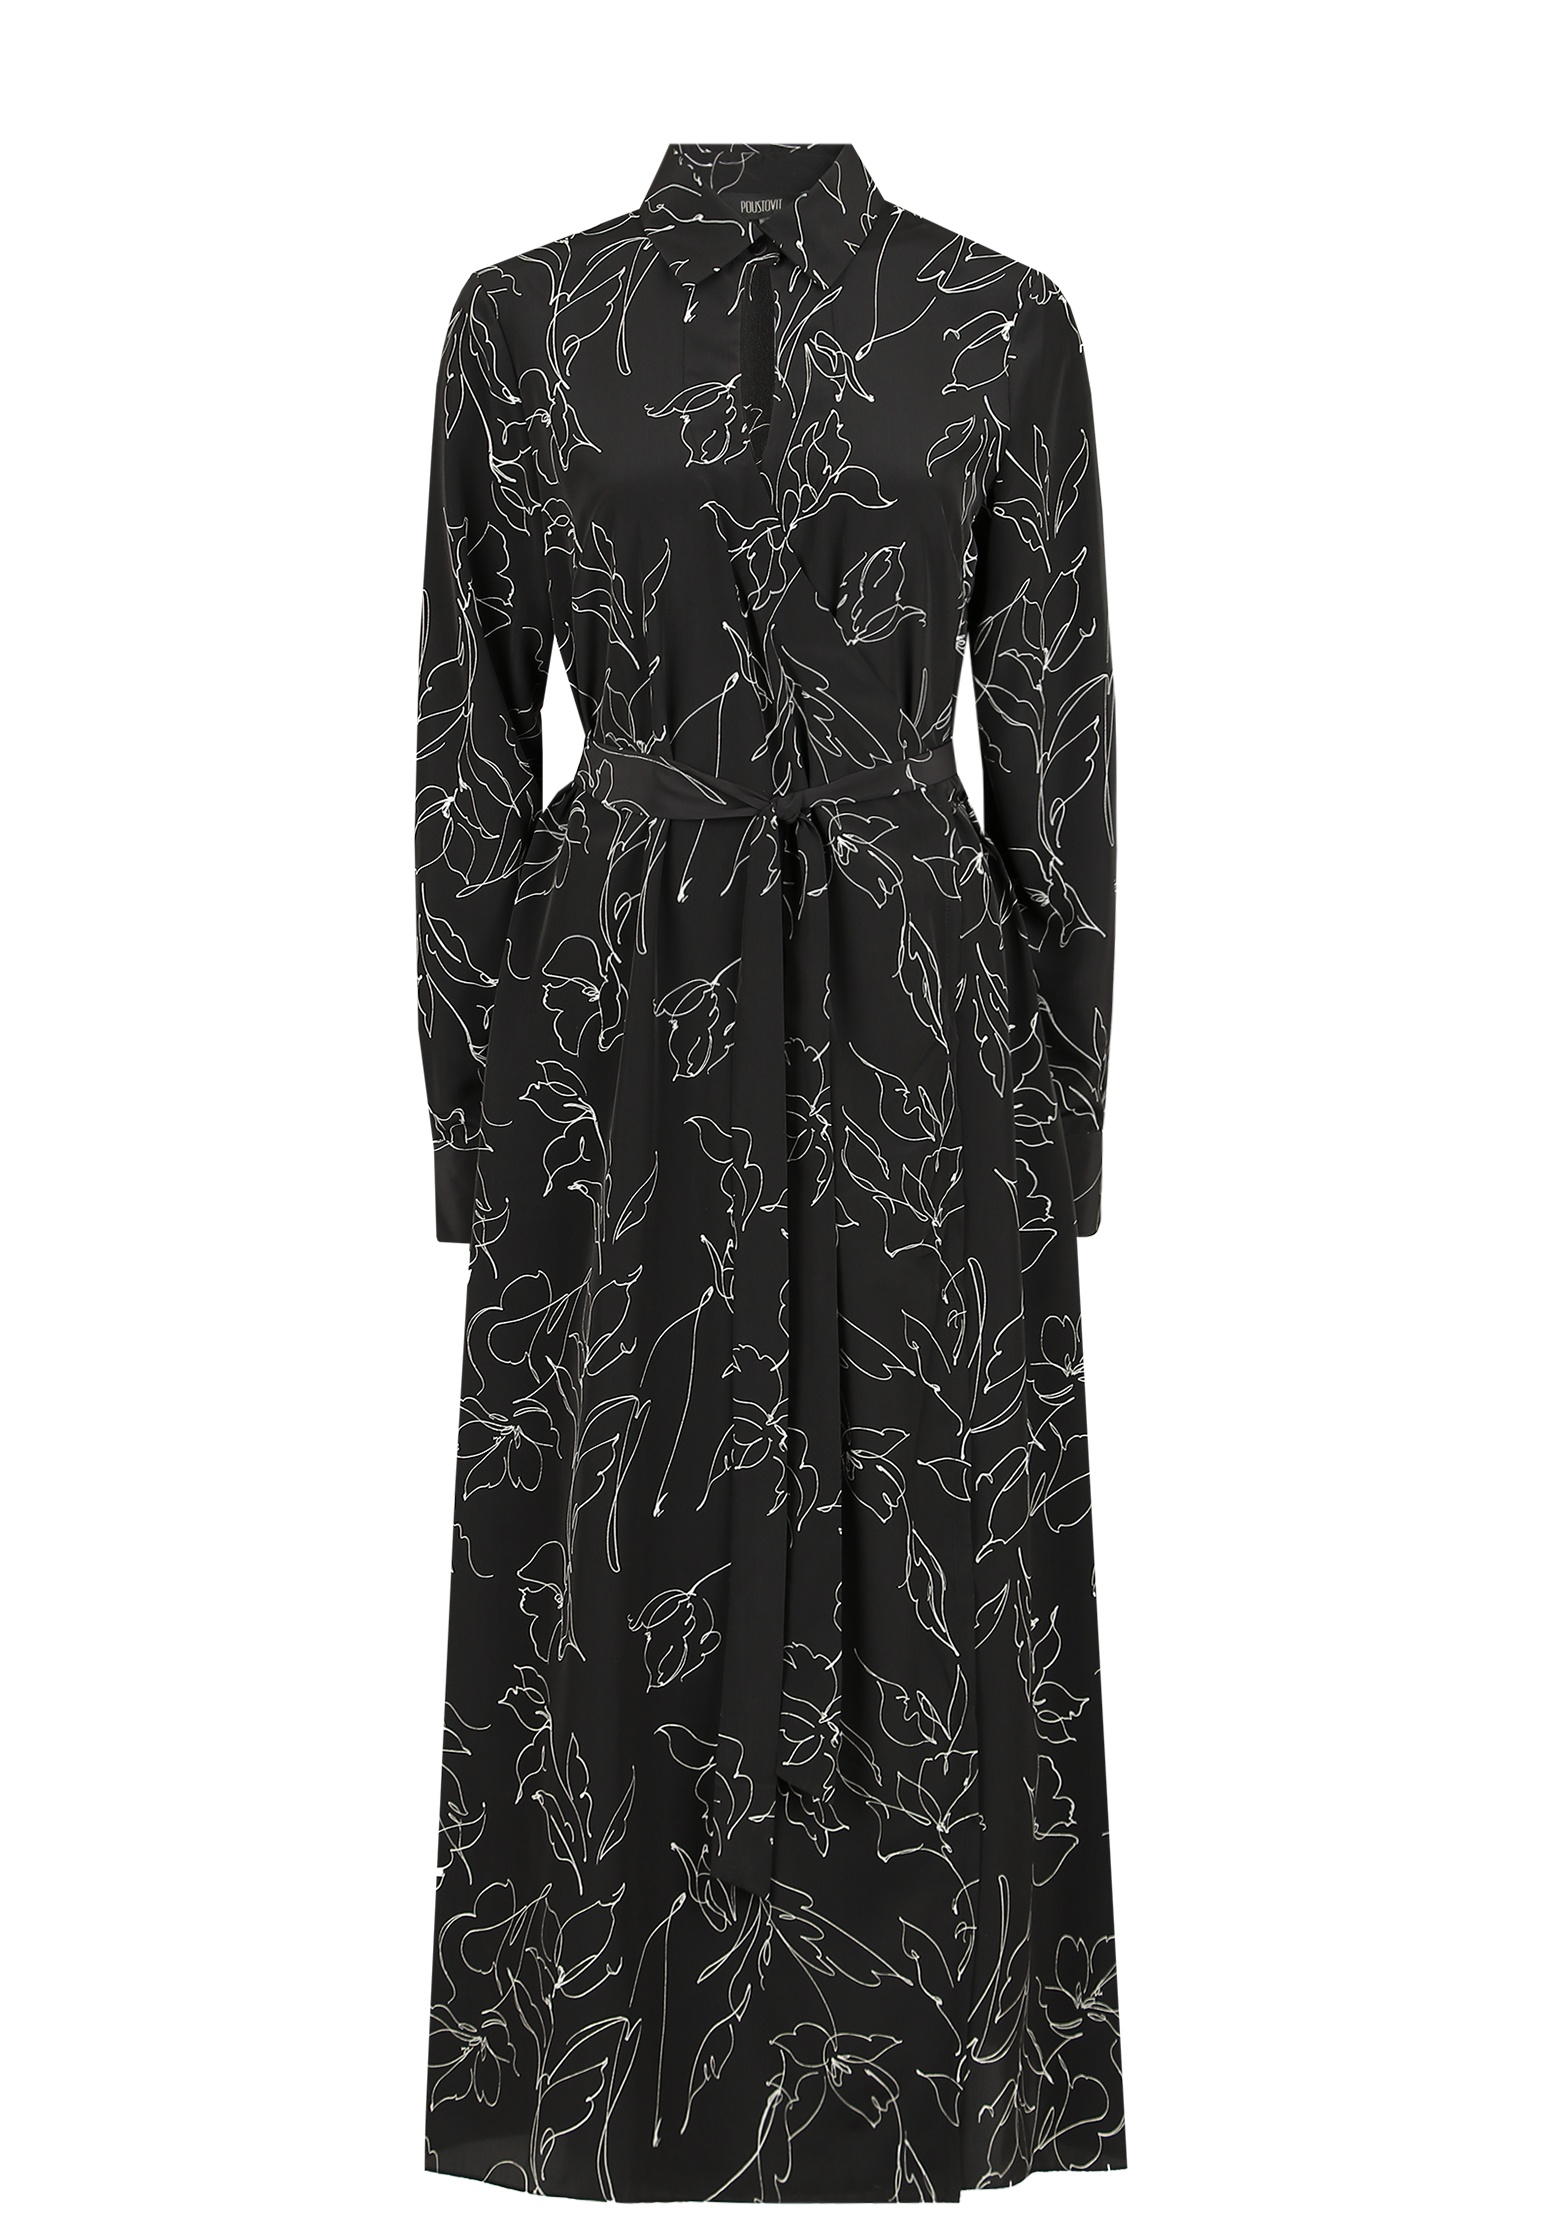 Платье женское Poustovit 139078 черное 42 IT